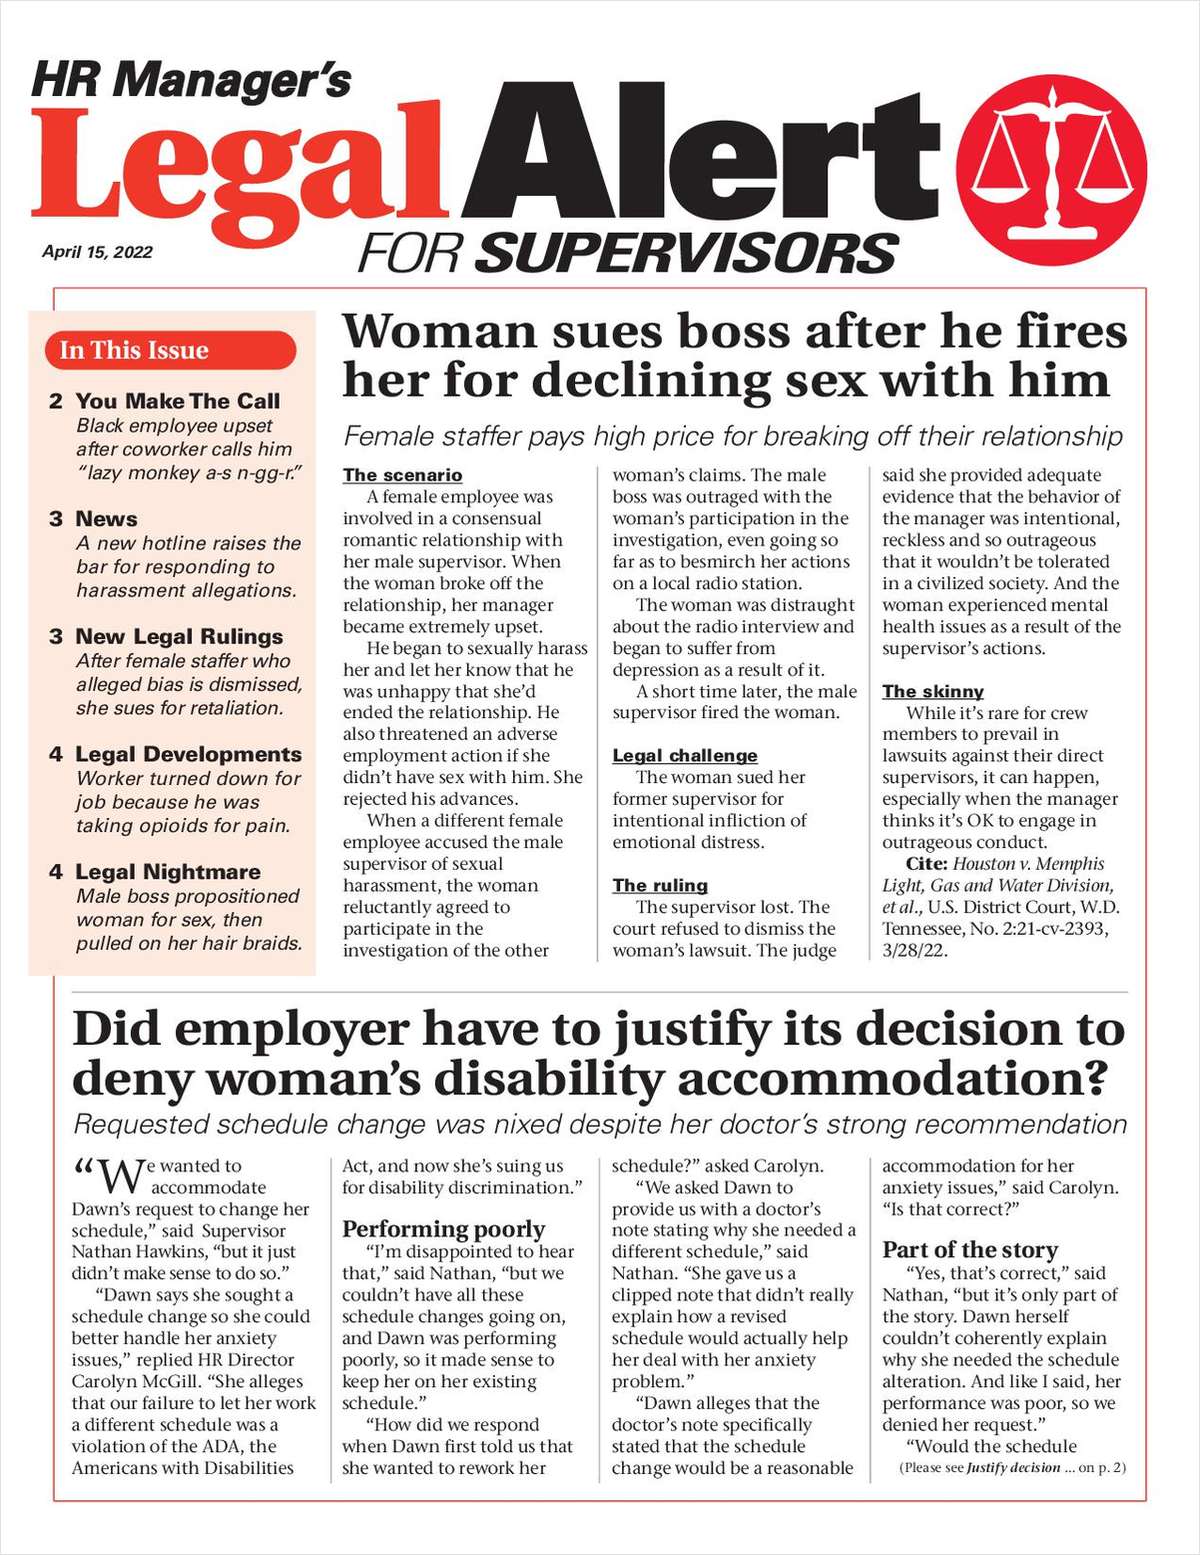 HR Manager's Legal Alert for Supervisors Newsletter: April 15 Edition